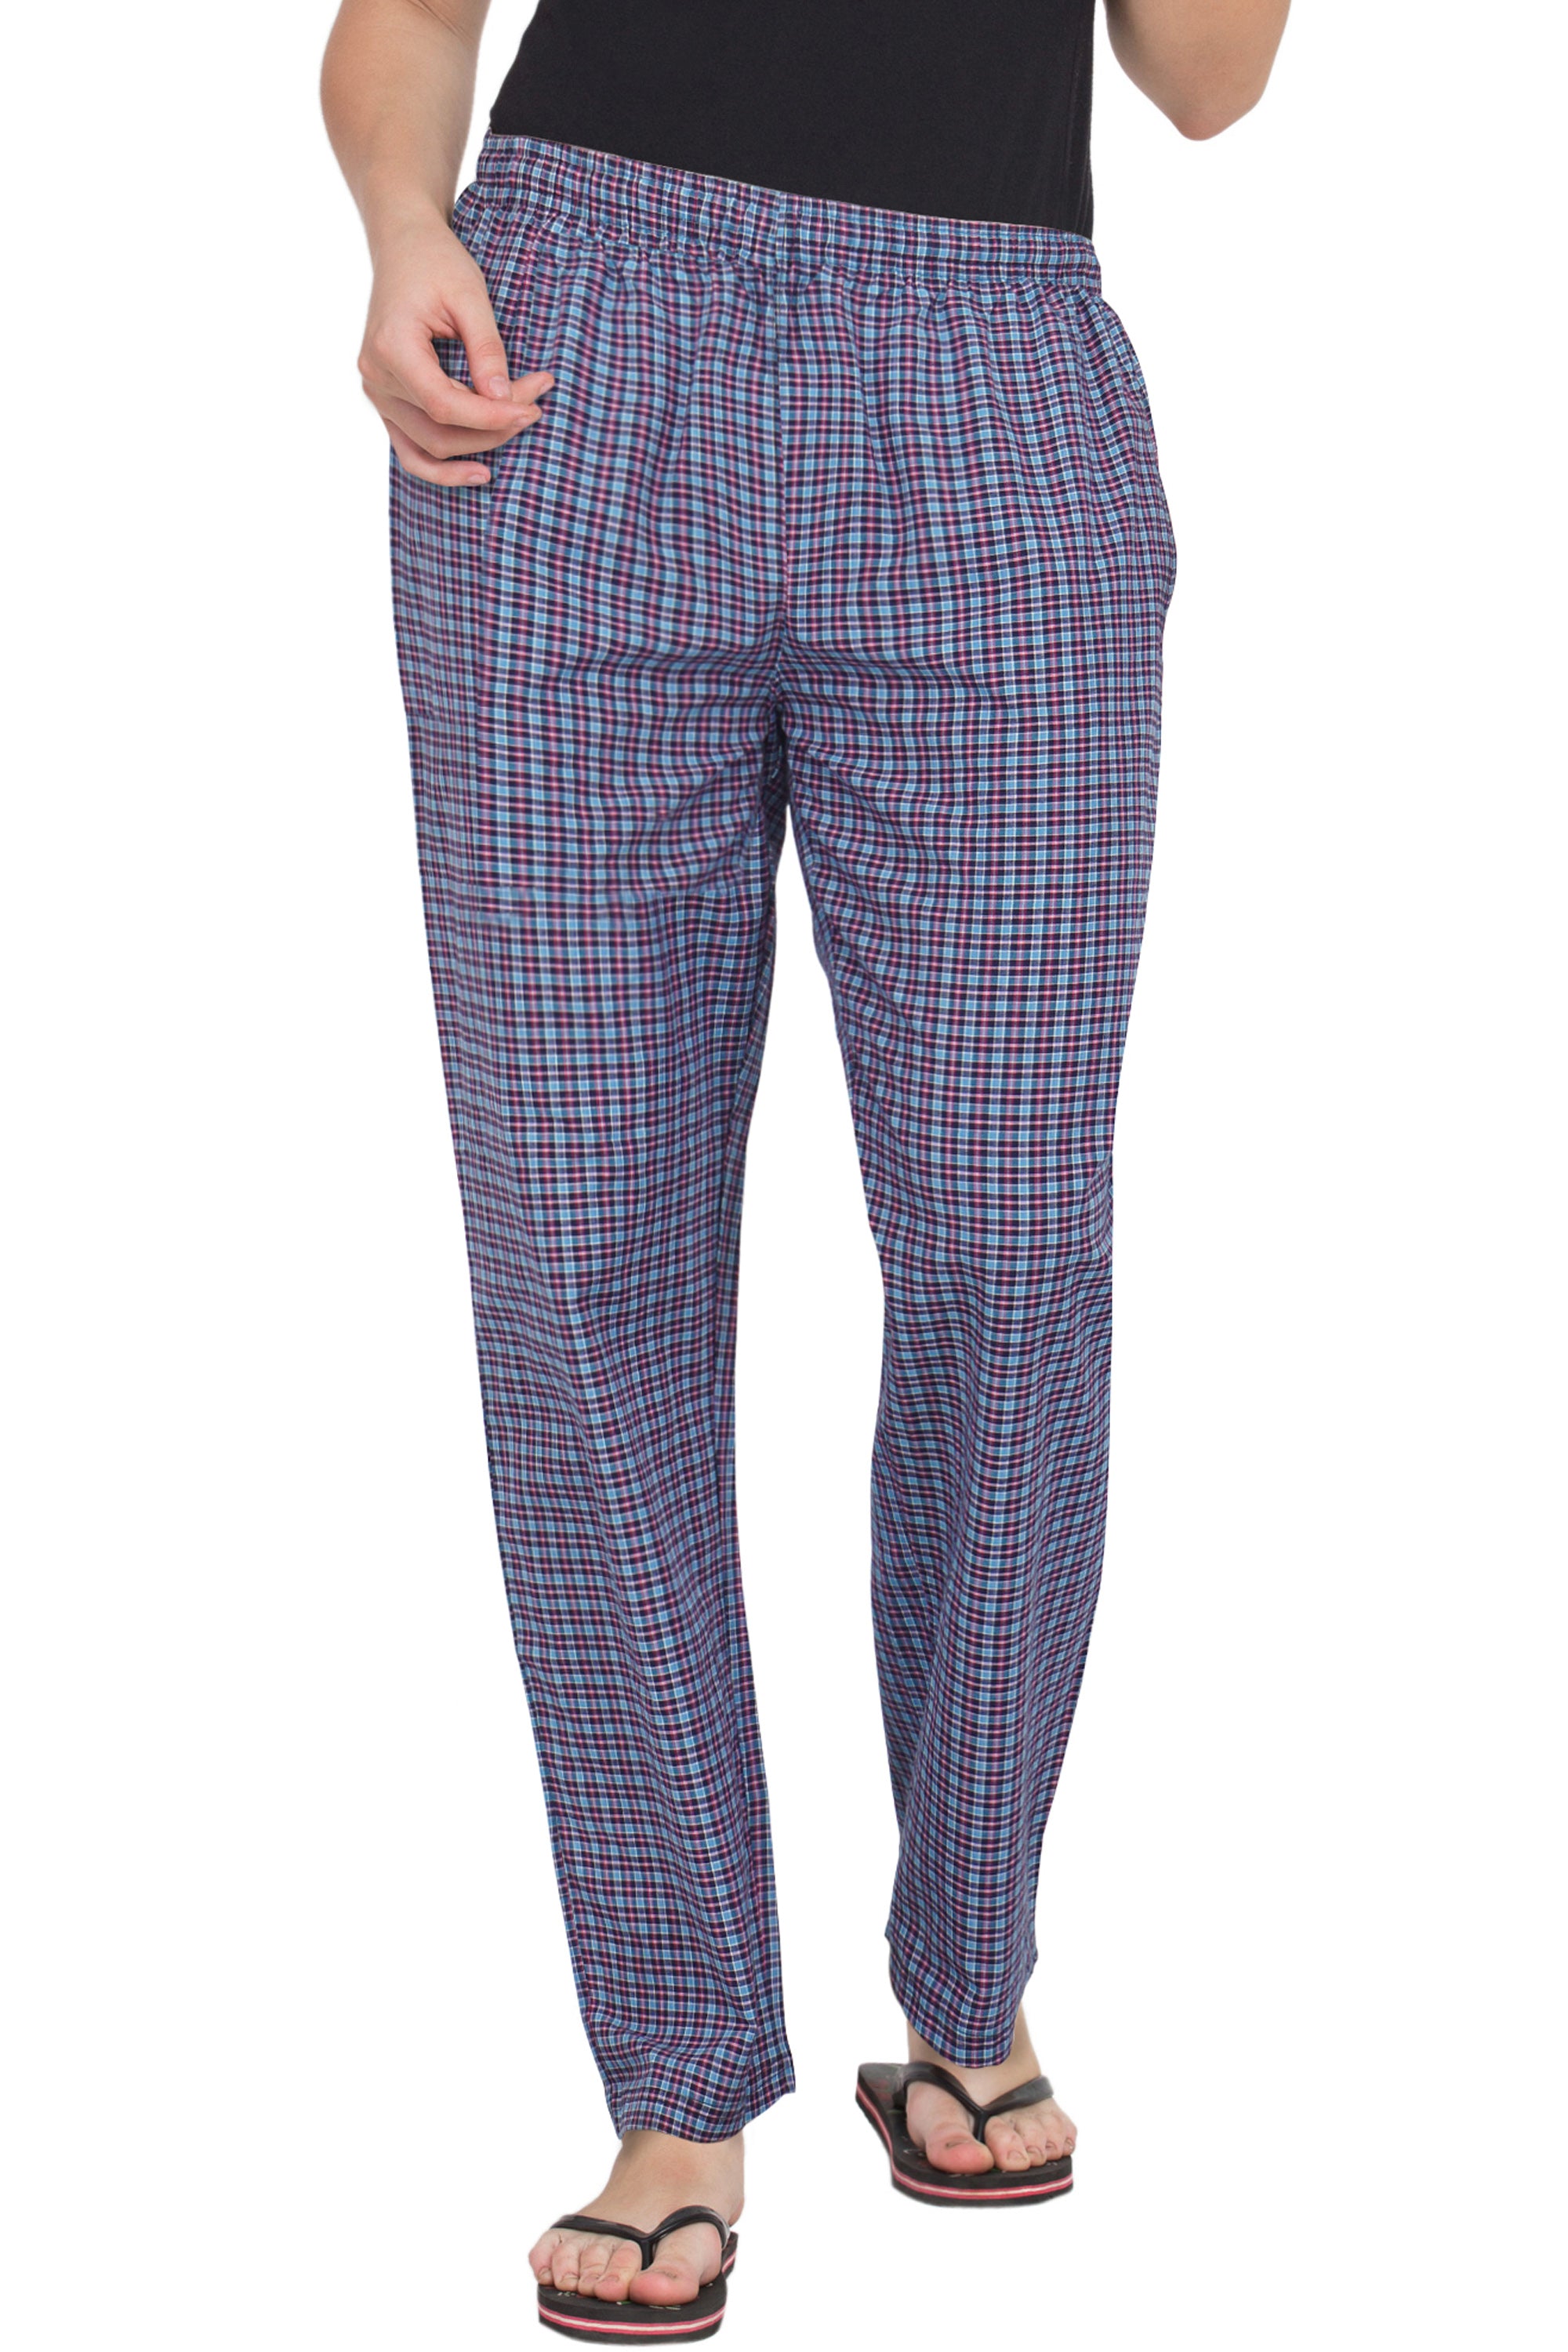 Woven Check PolyCotton Mens Pyjamas Night wear Bottoms Lounge Pants Trousers  | eBay